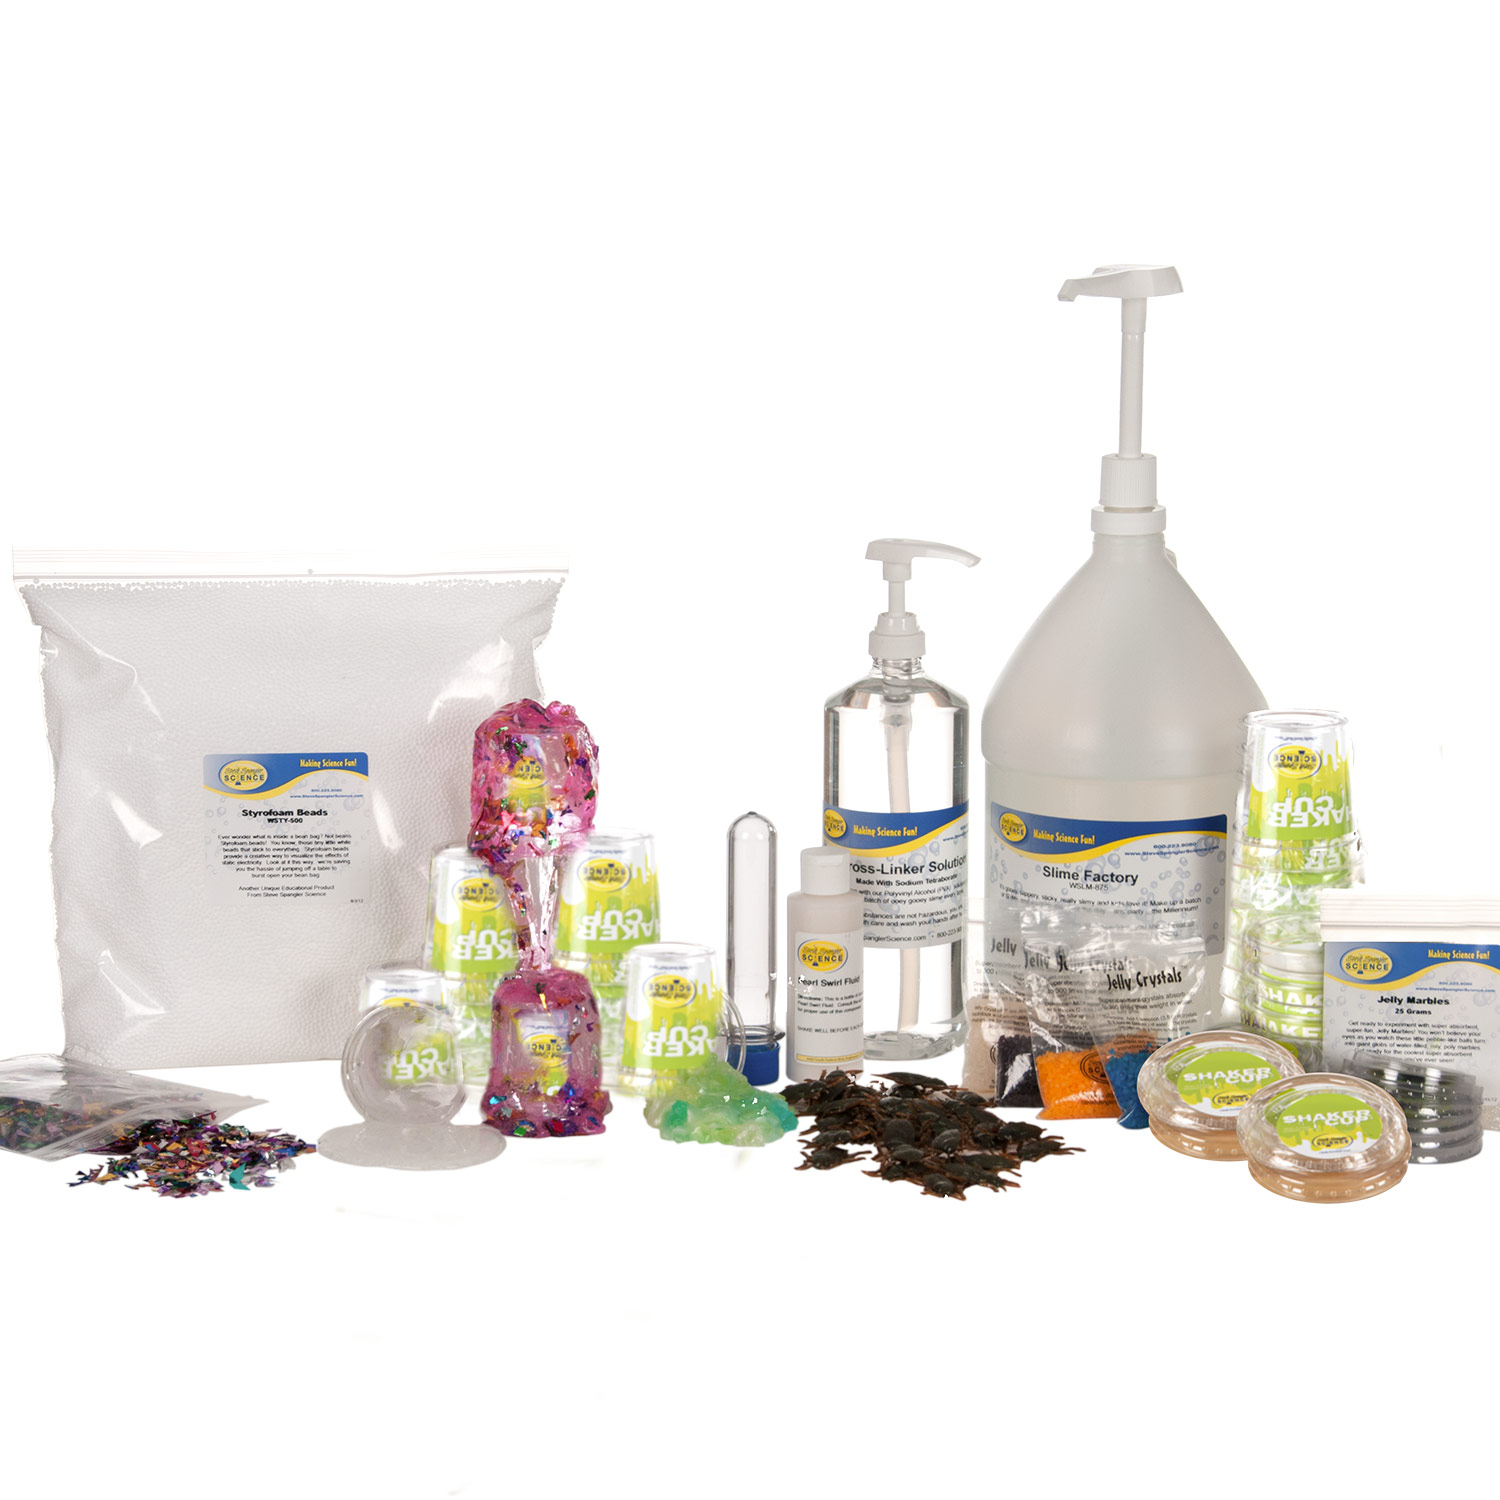 Slime Factory - One Gallon Party Kit - Steve Spangler Science